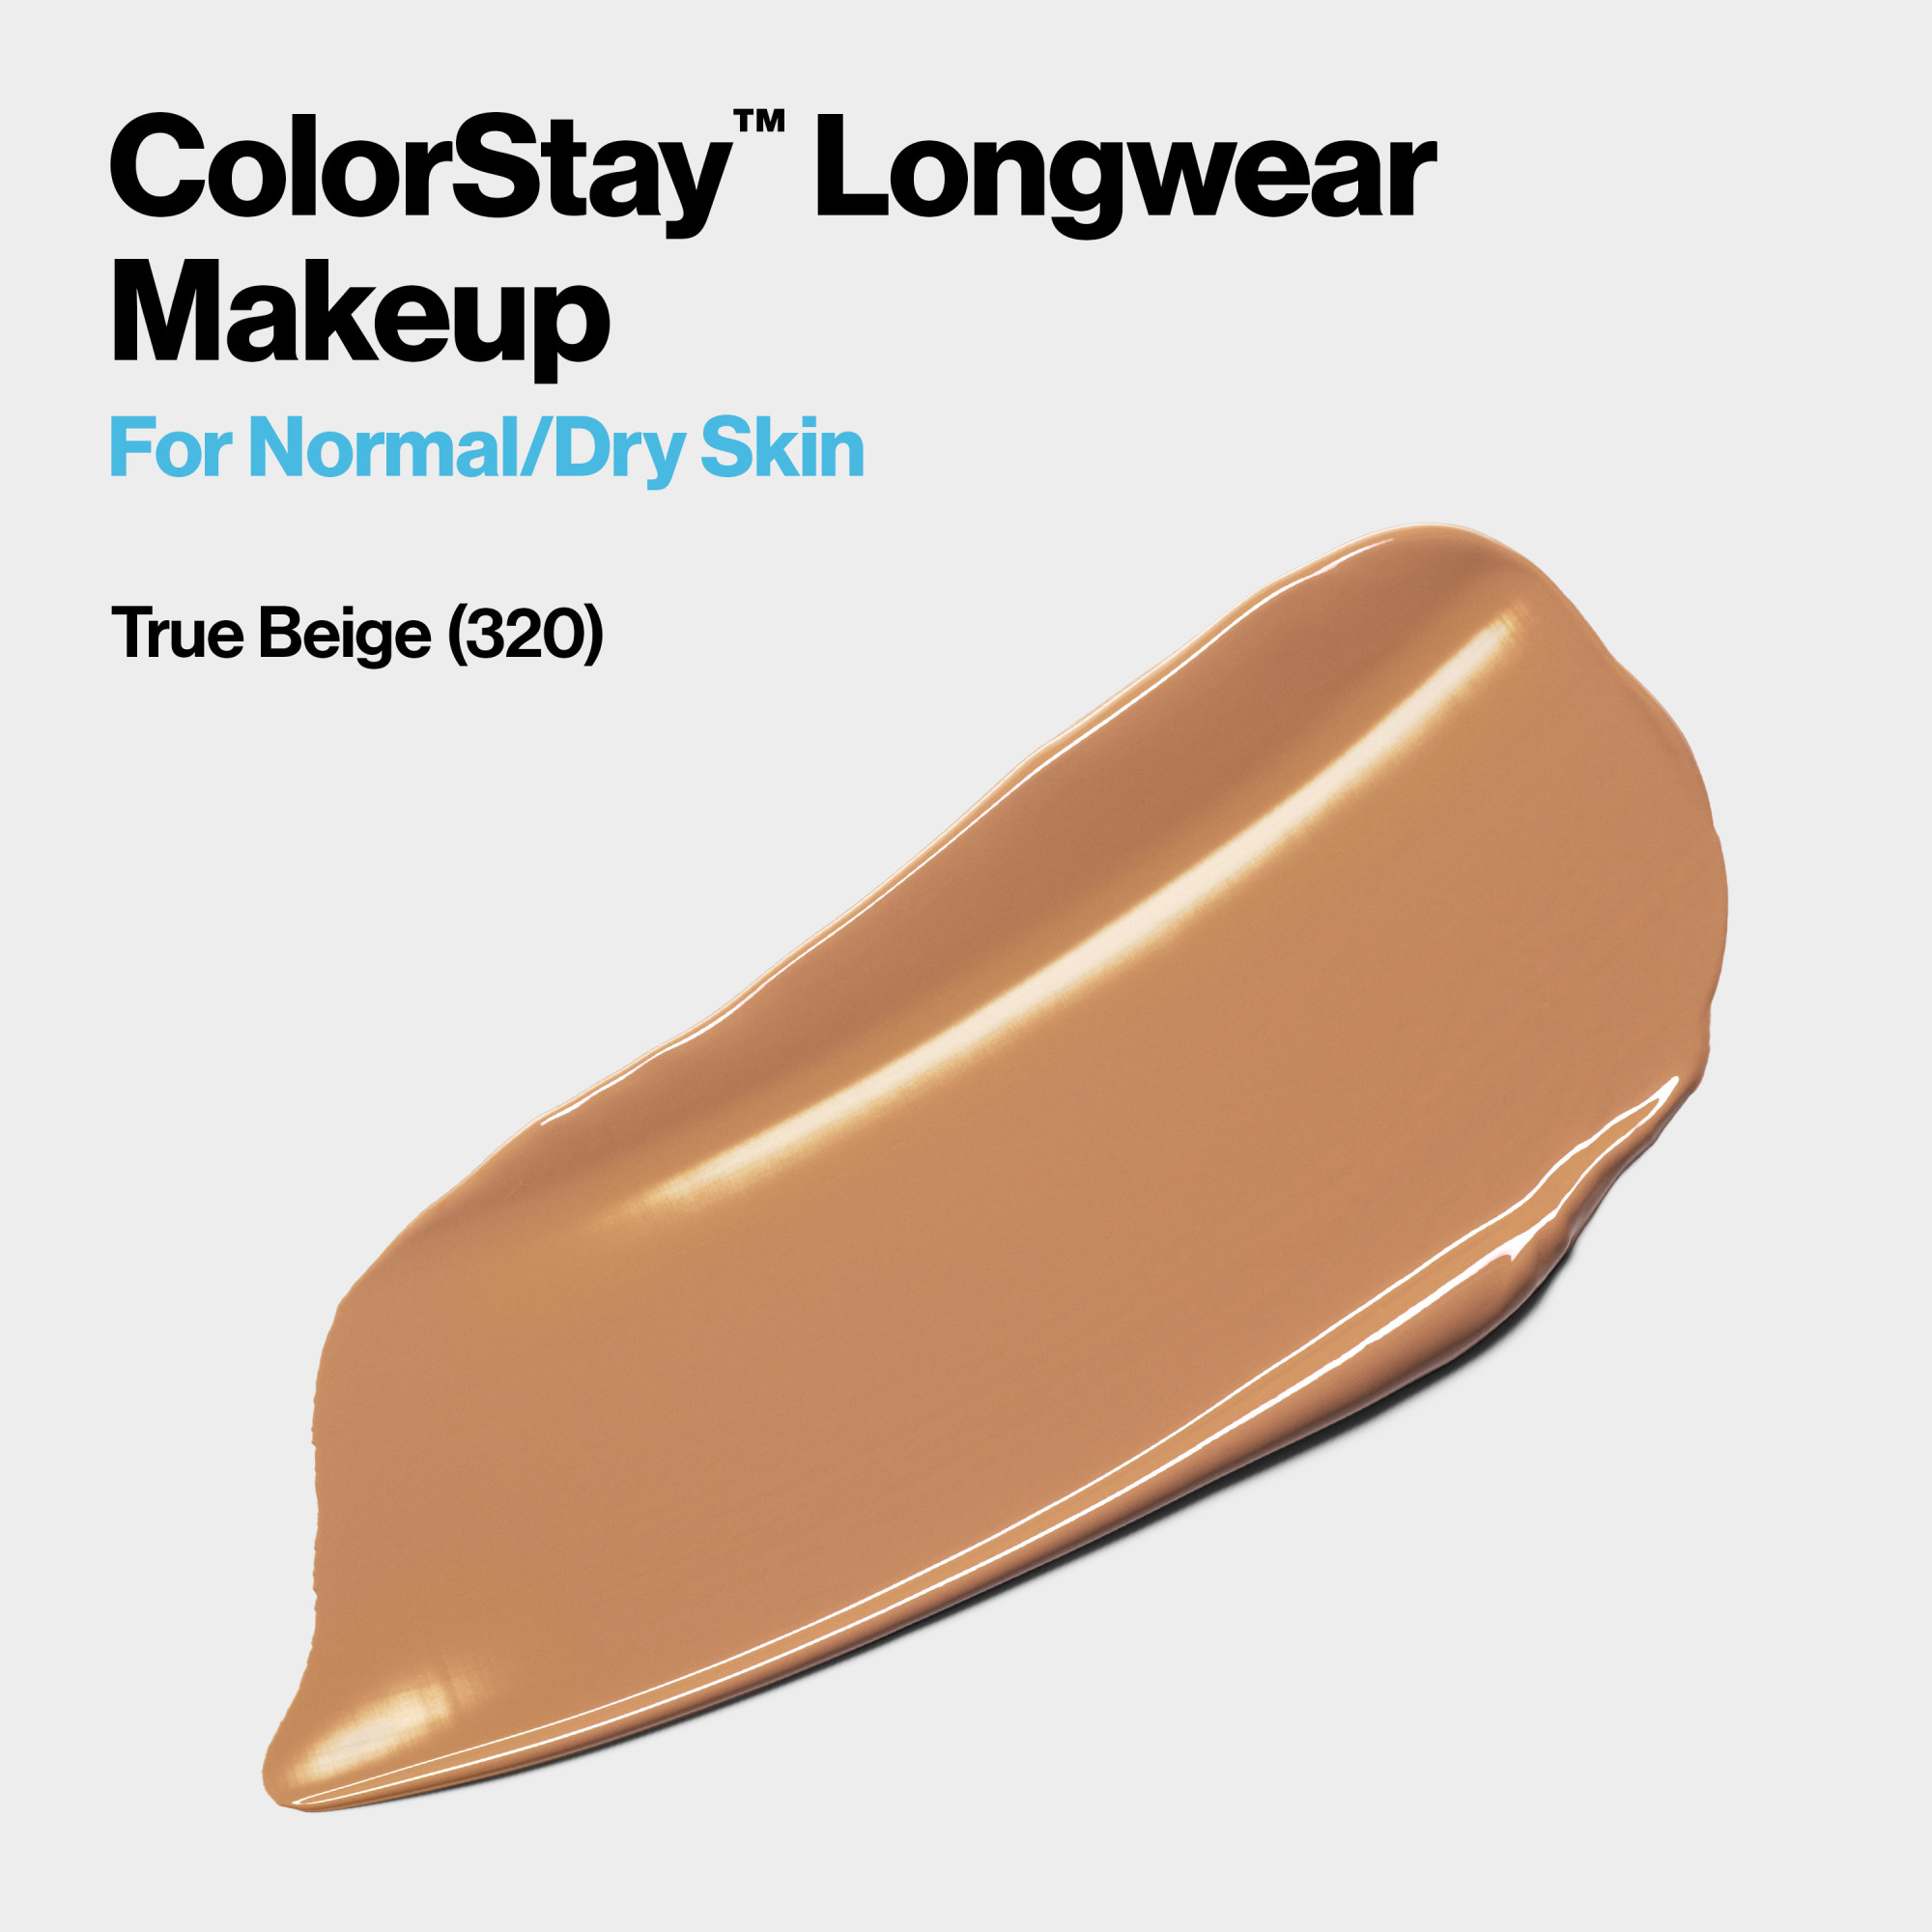 Revlon ColorStay Liquid Foundation Makeup, Normal/Dry Skin, SPF 20, 320 True Beige, 1 fl oz. - image 3 of 12